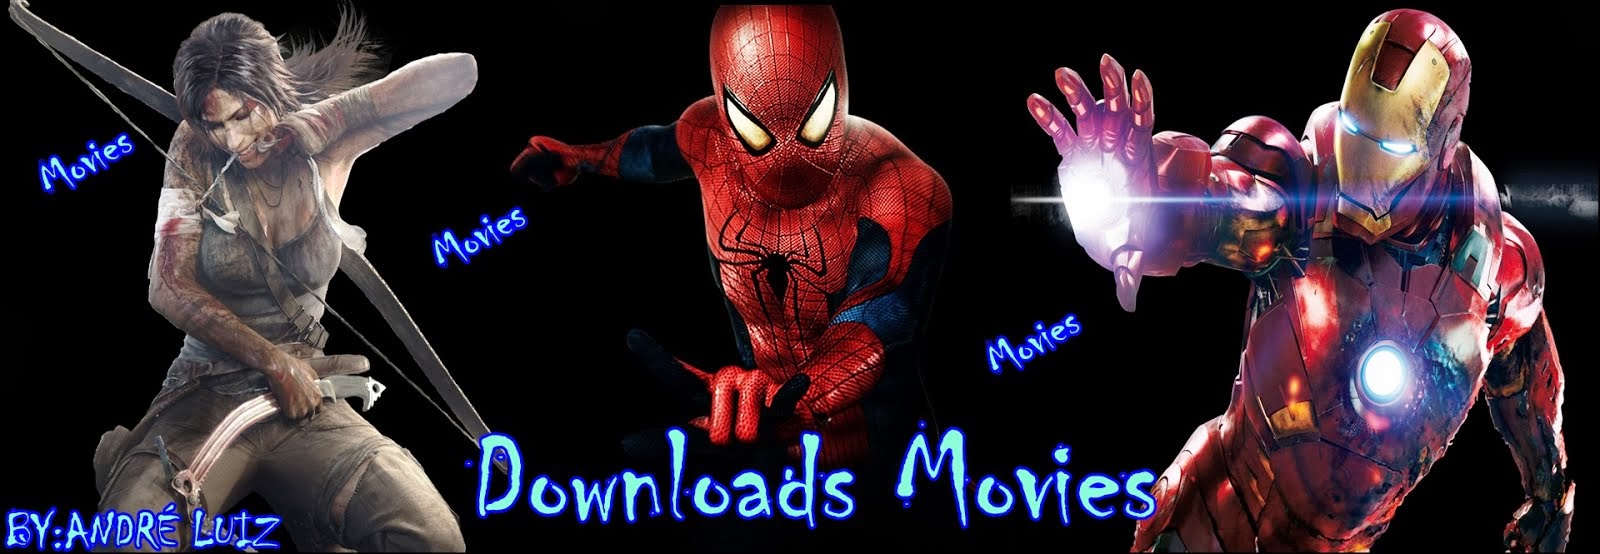 Movies Downloads